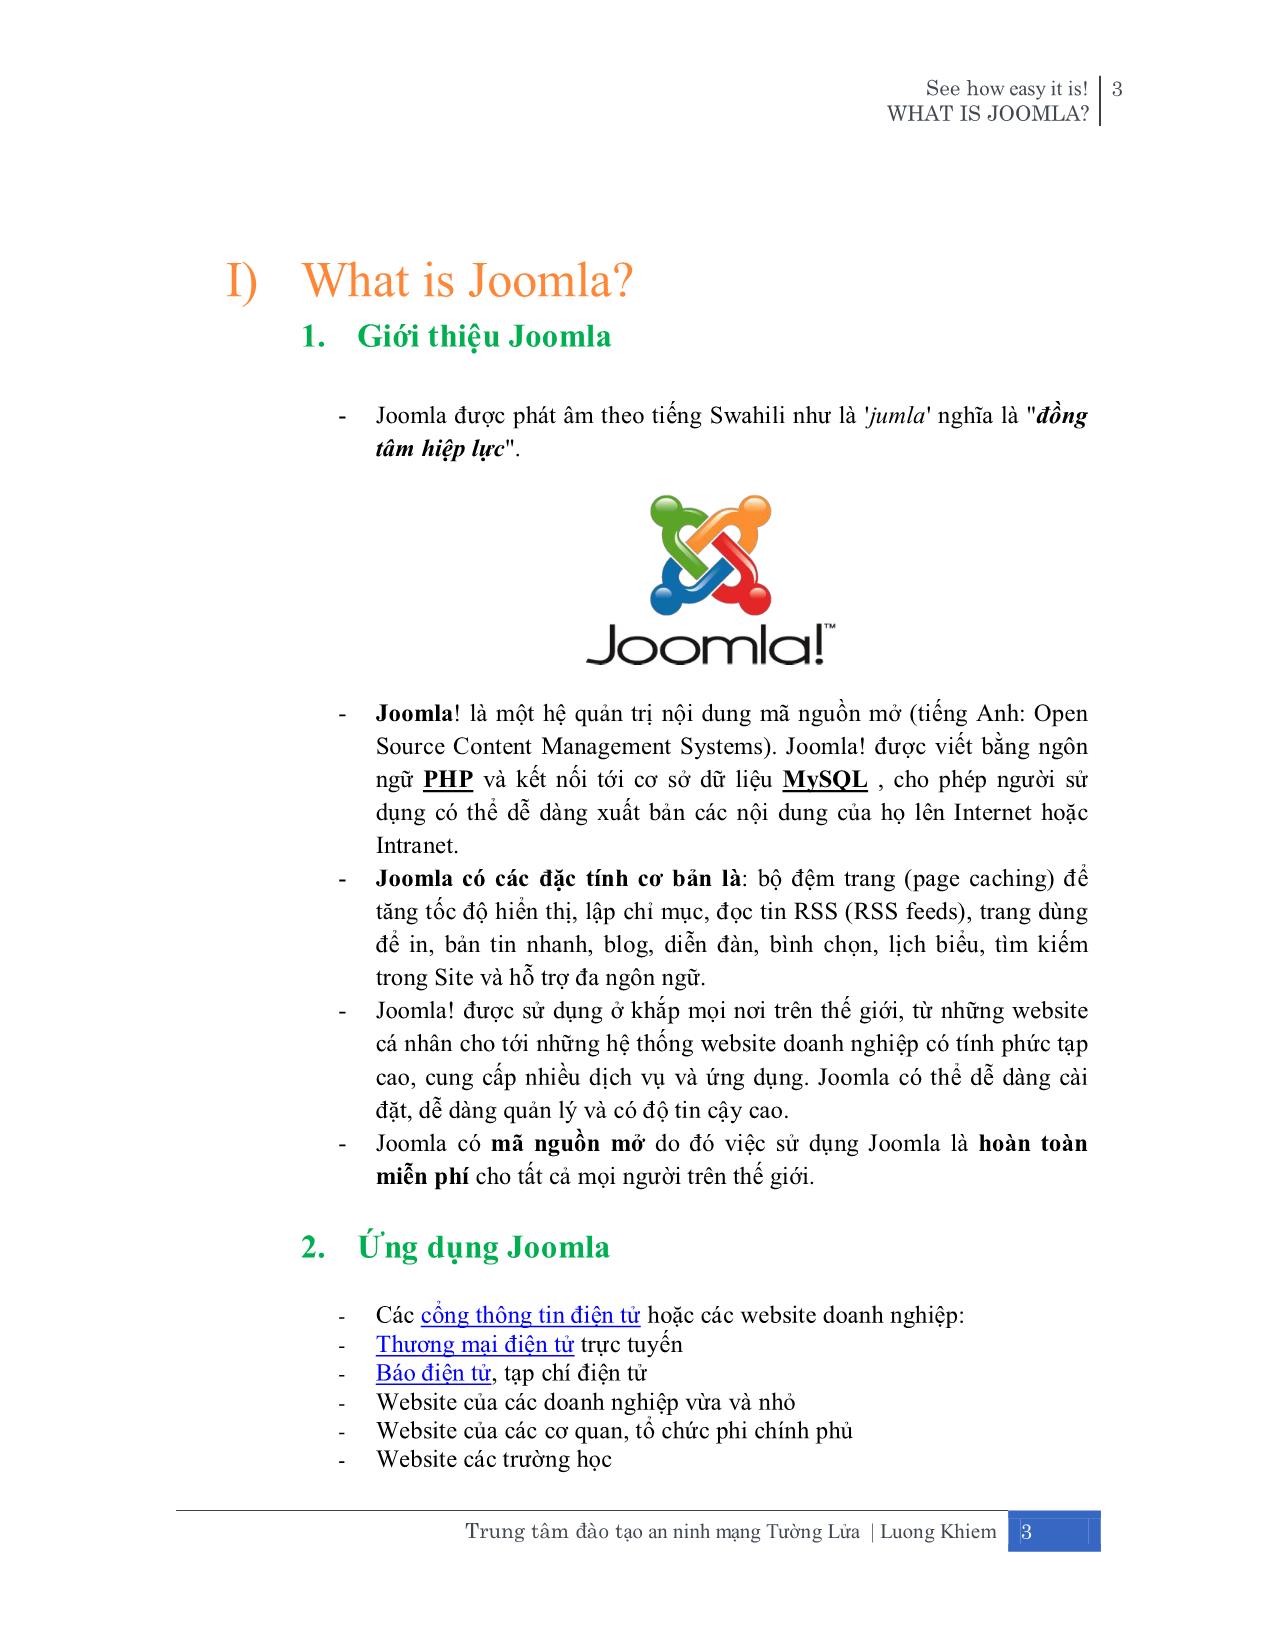 What is joomla? trang 4